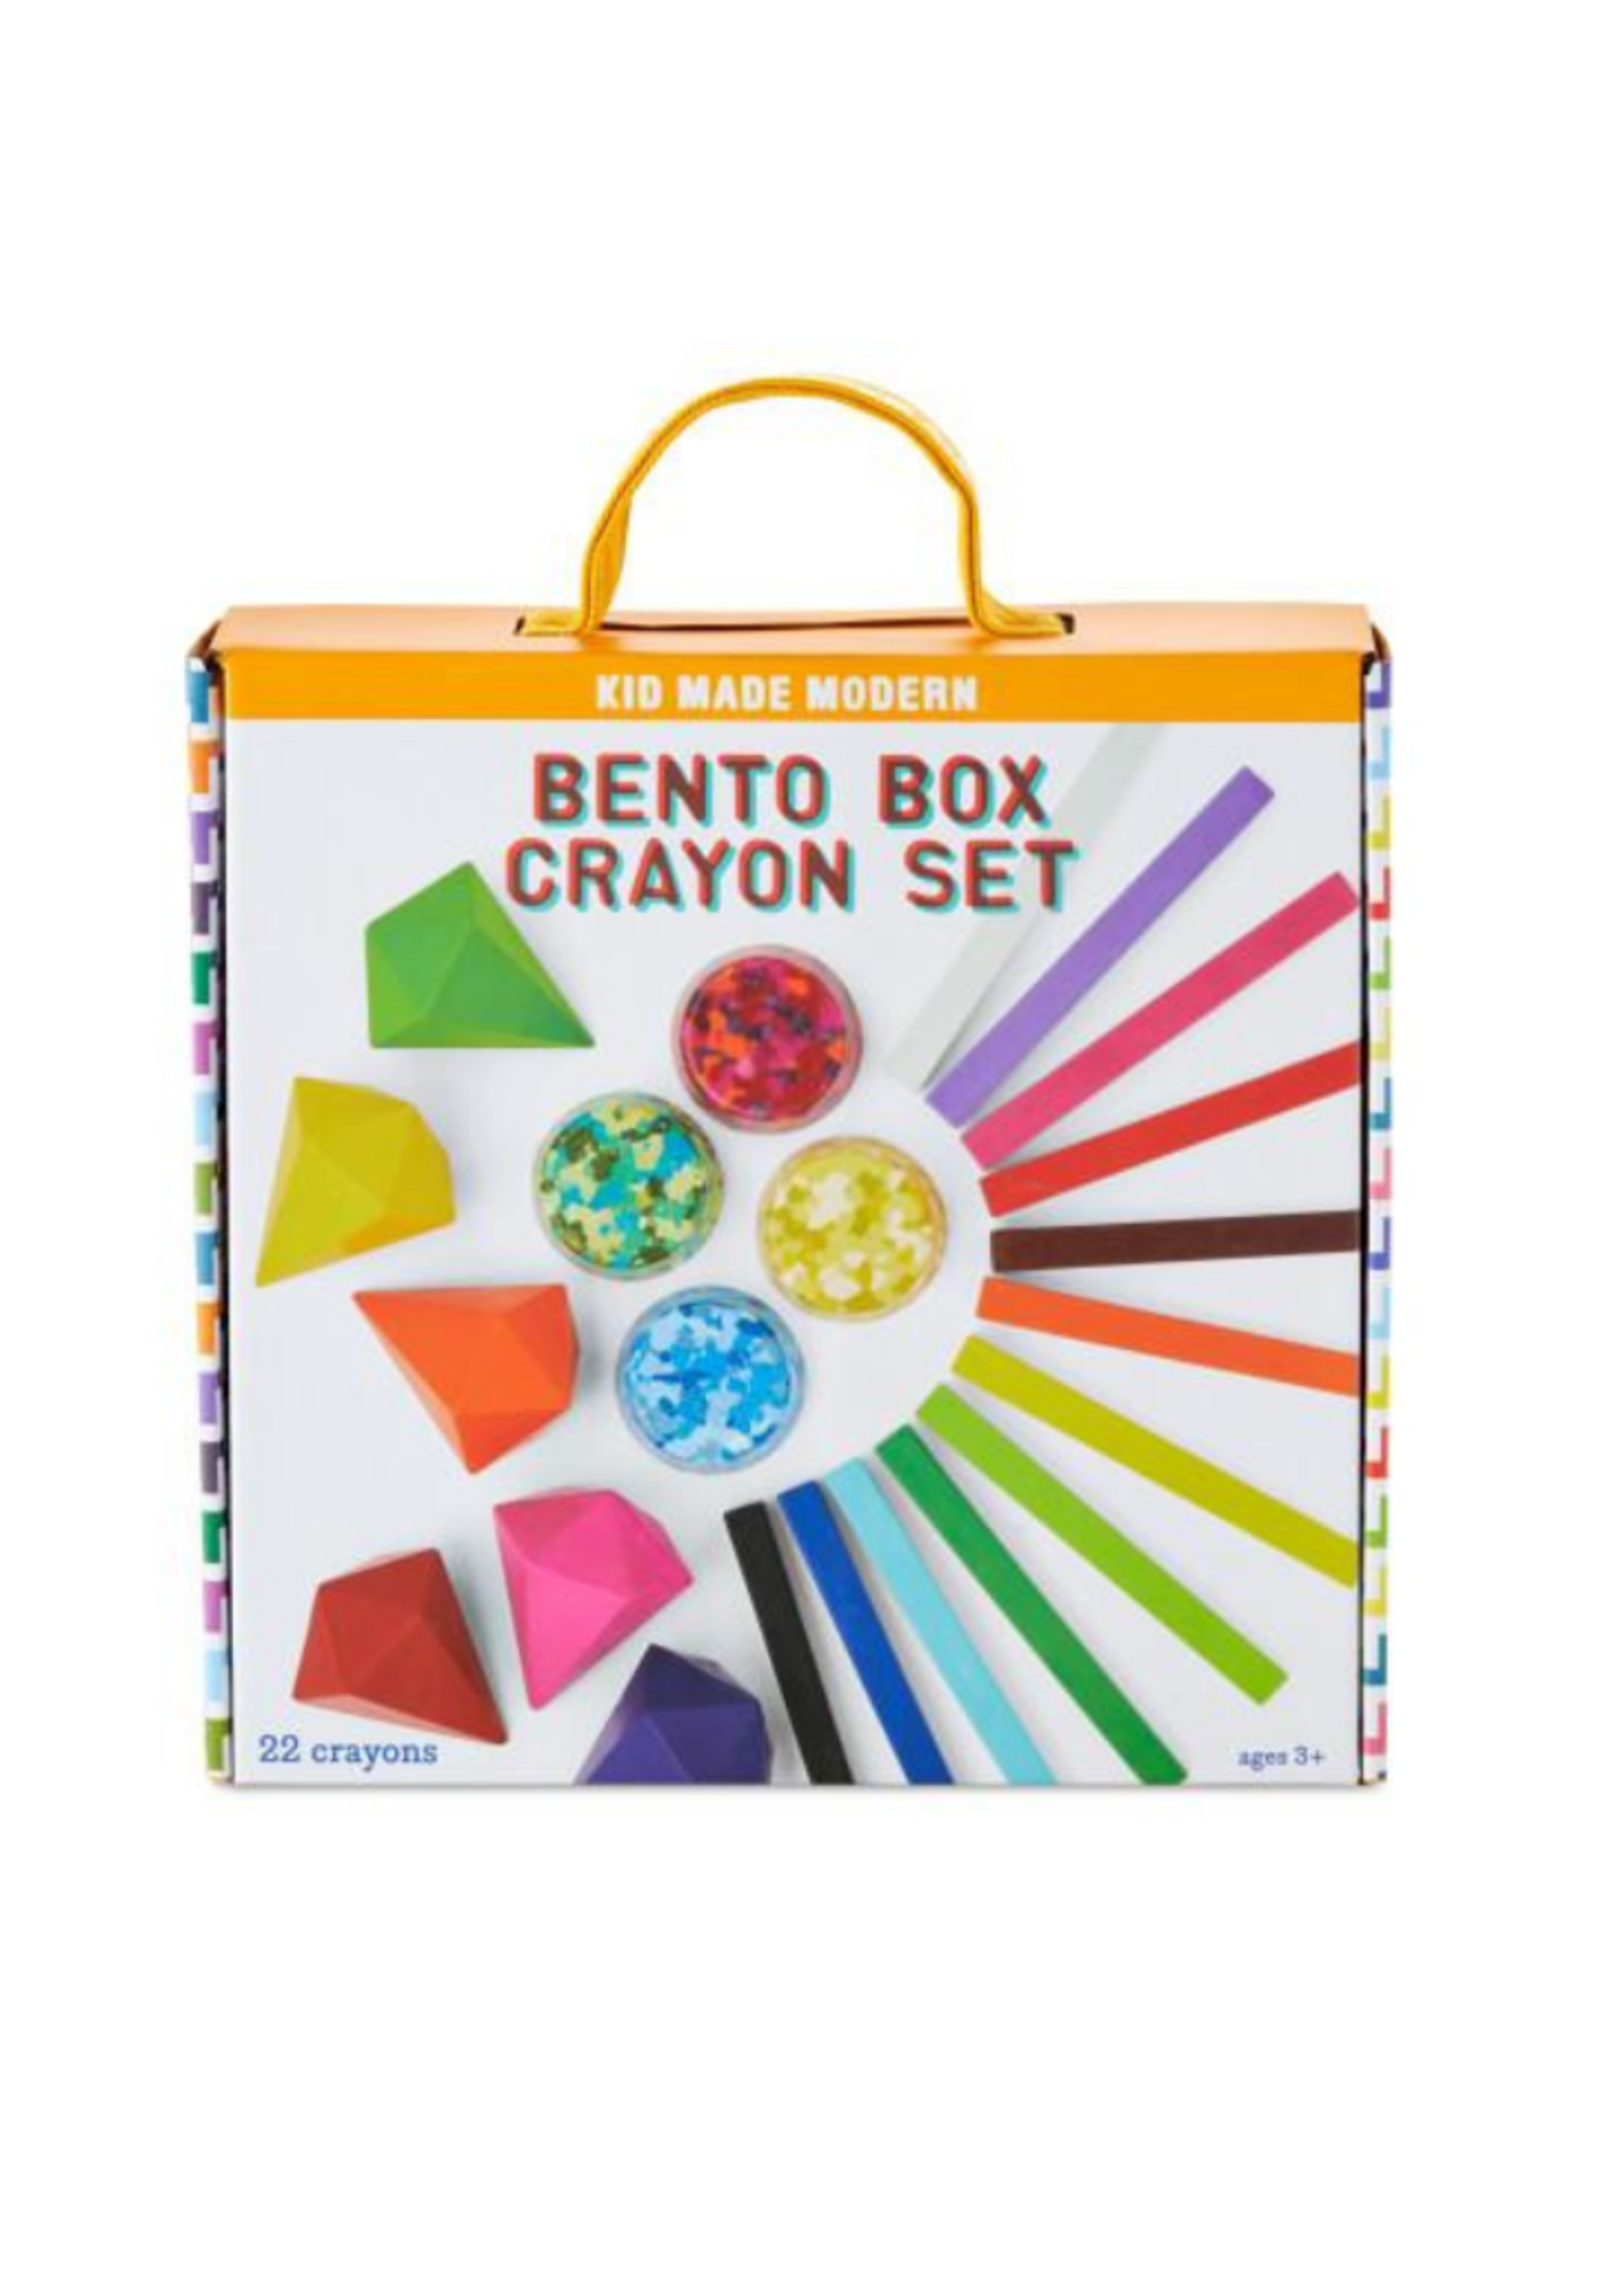 Kids Made Modern Bento Box Crayon Set